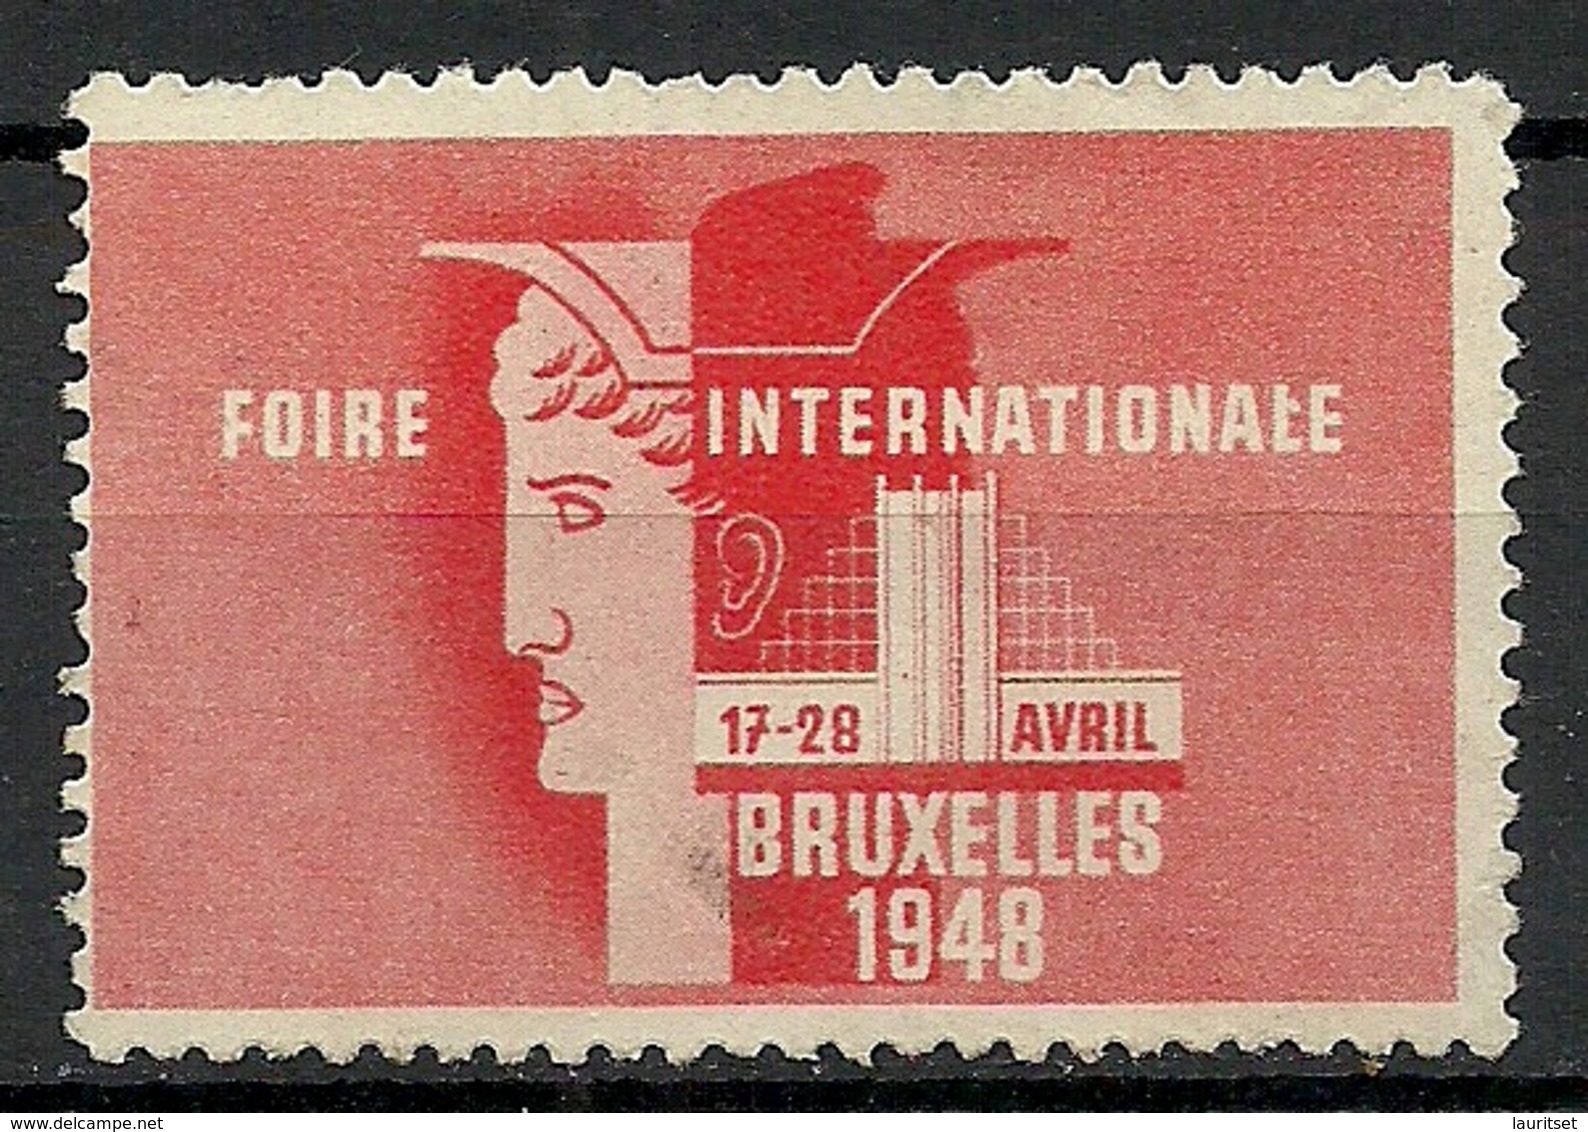 Belgium 1948 Foire Internationale Bruxelles Messe Fair (*) - Erinnophilie - Reklamemarken [E]